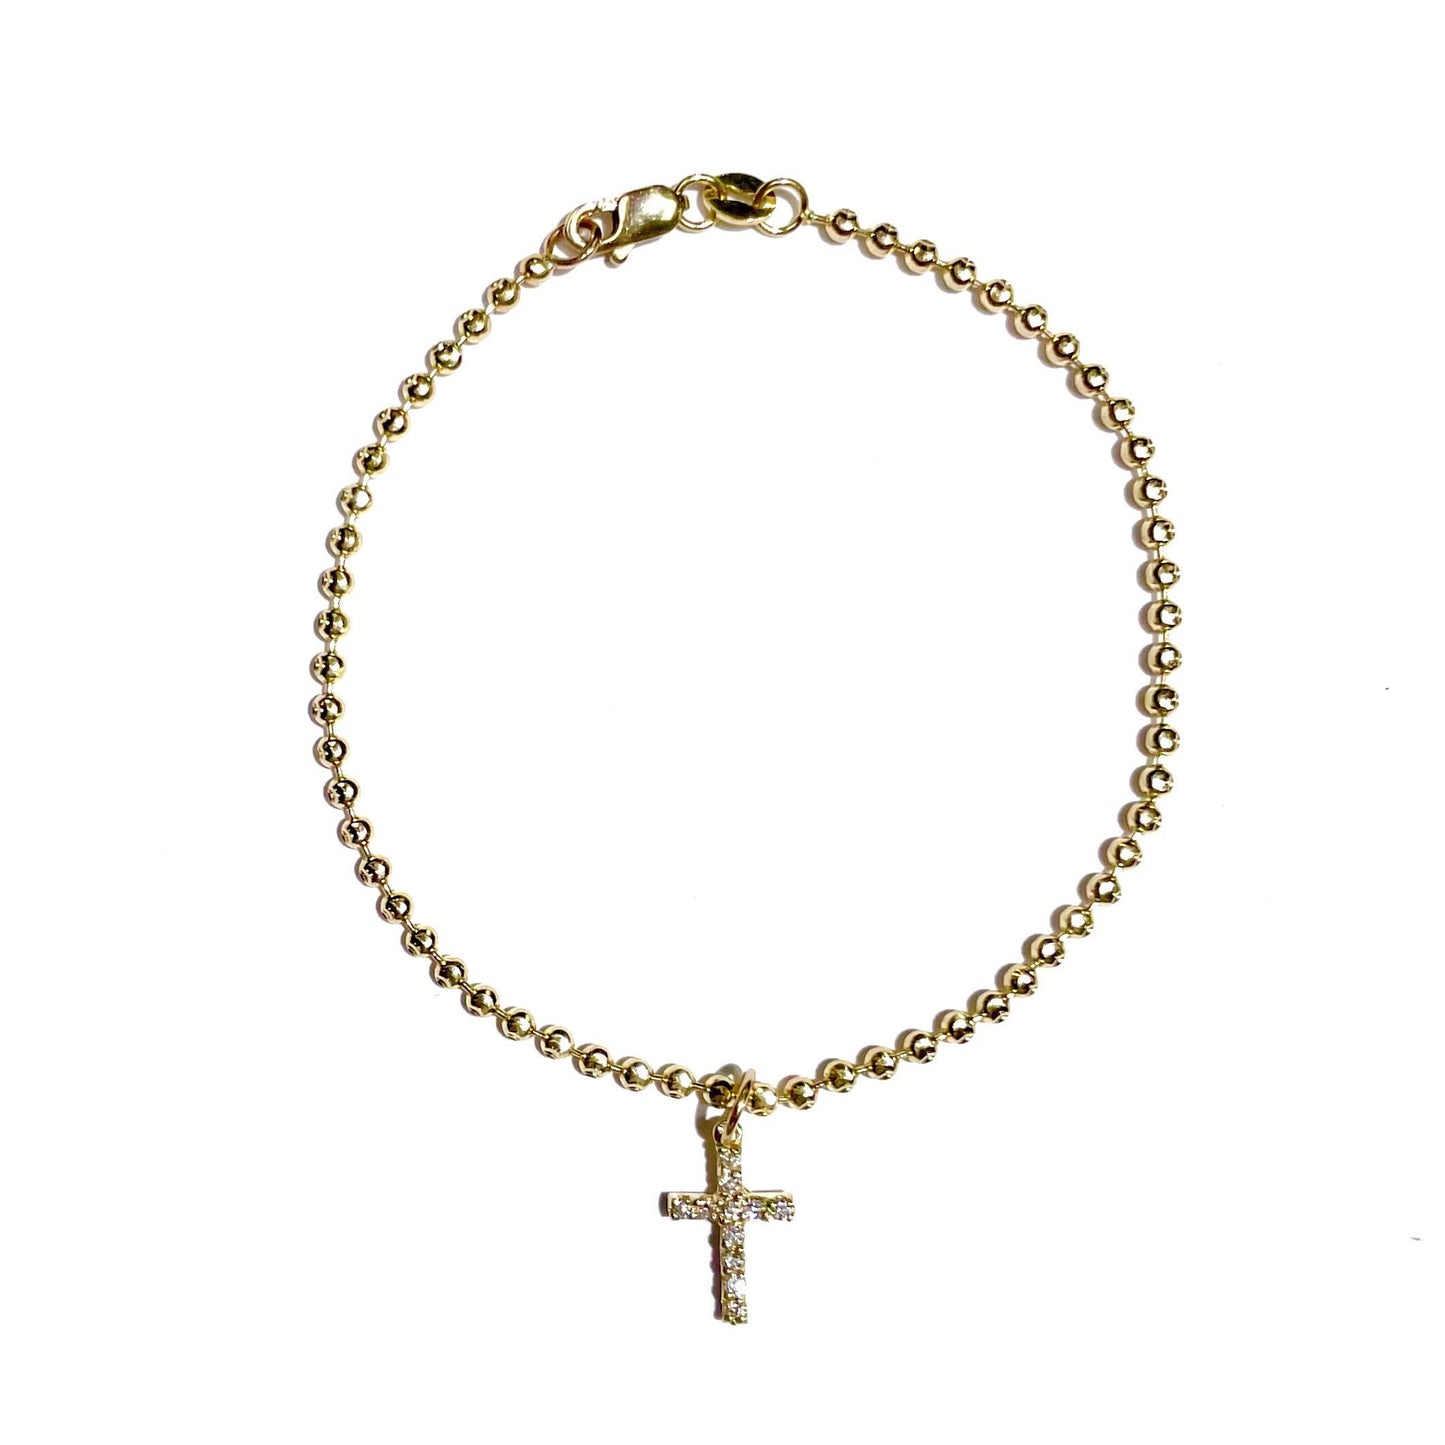 Cassie Bracelet with Mini Diamond Cross